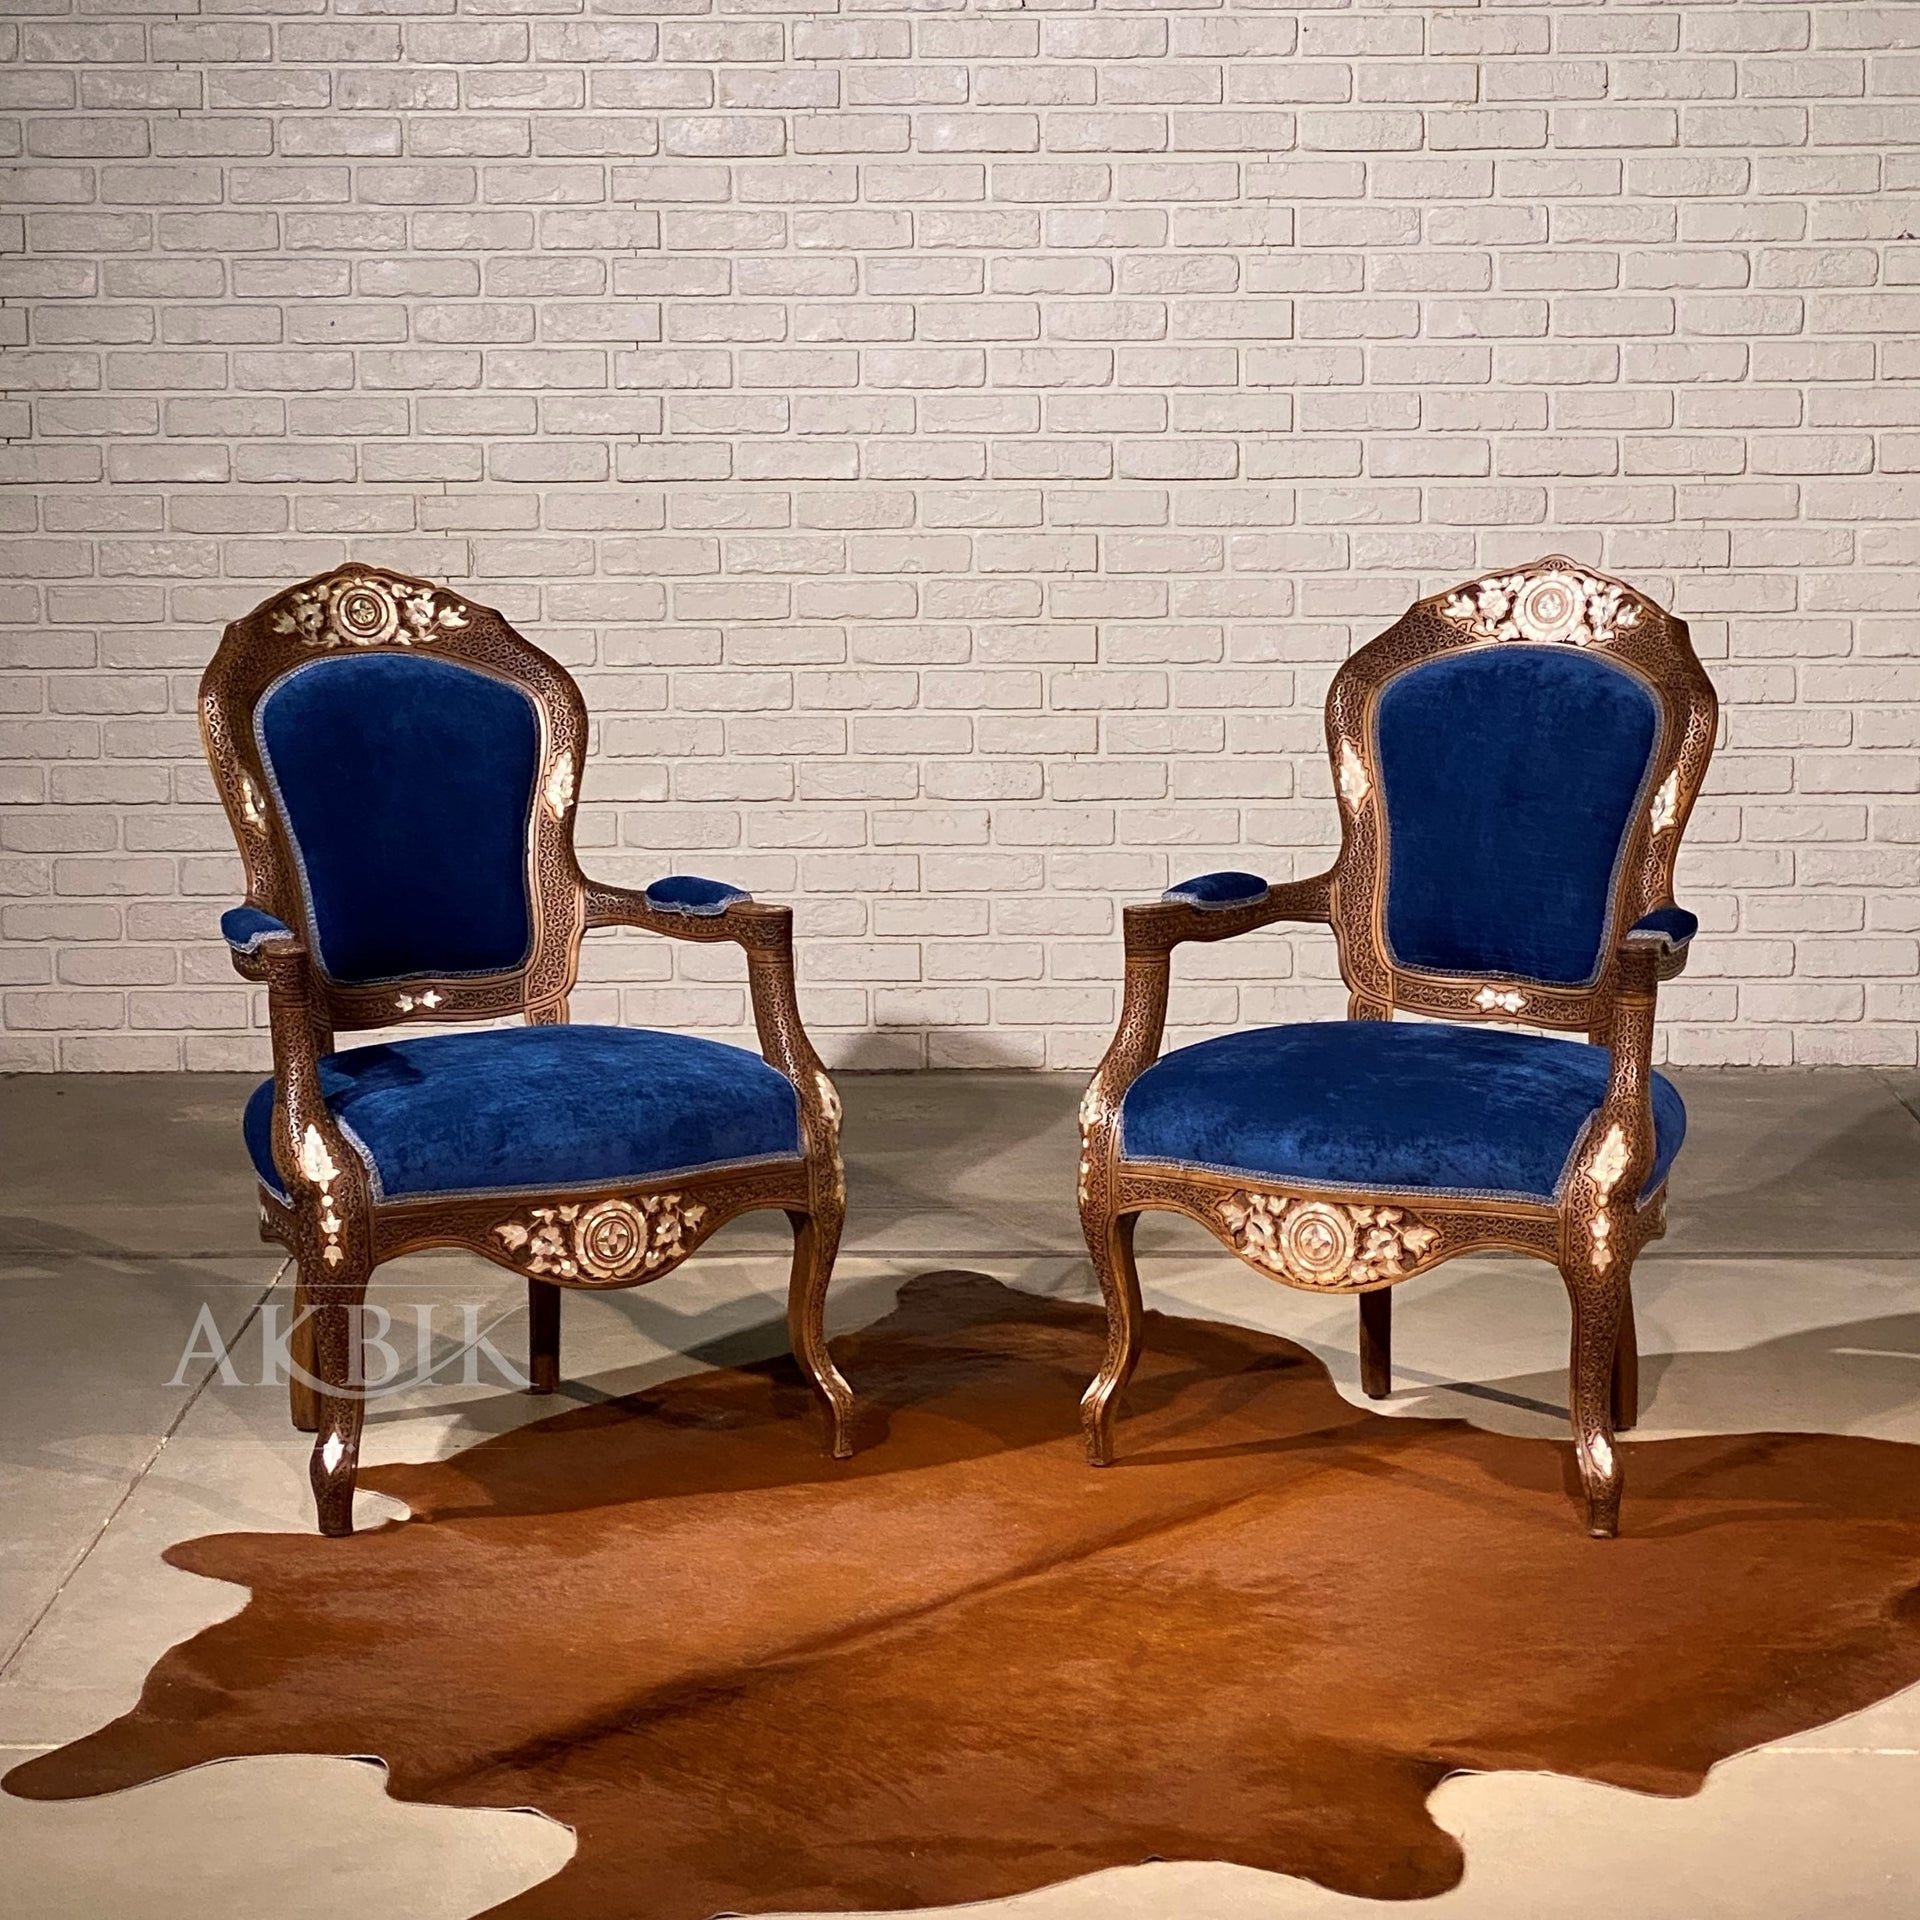 ROYAL BLUE CHAIRS SET - AKBIK Furniture & Design